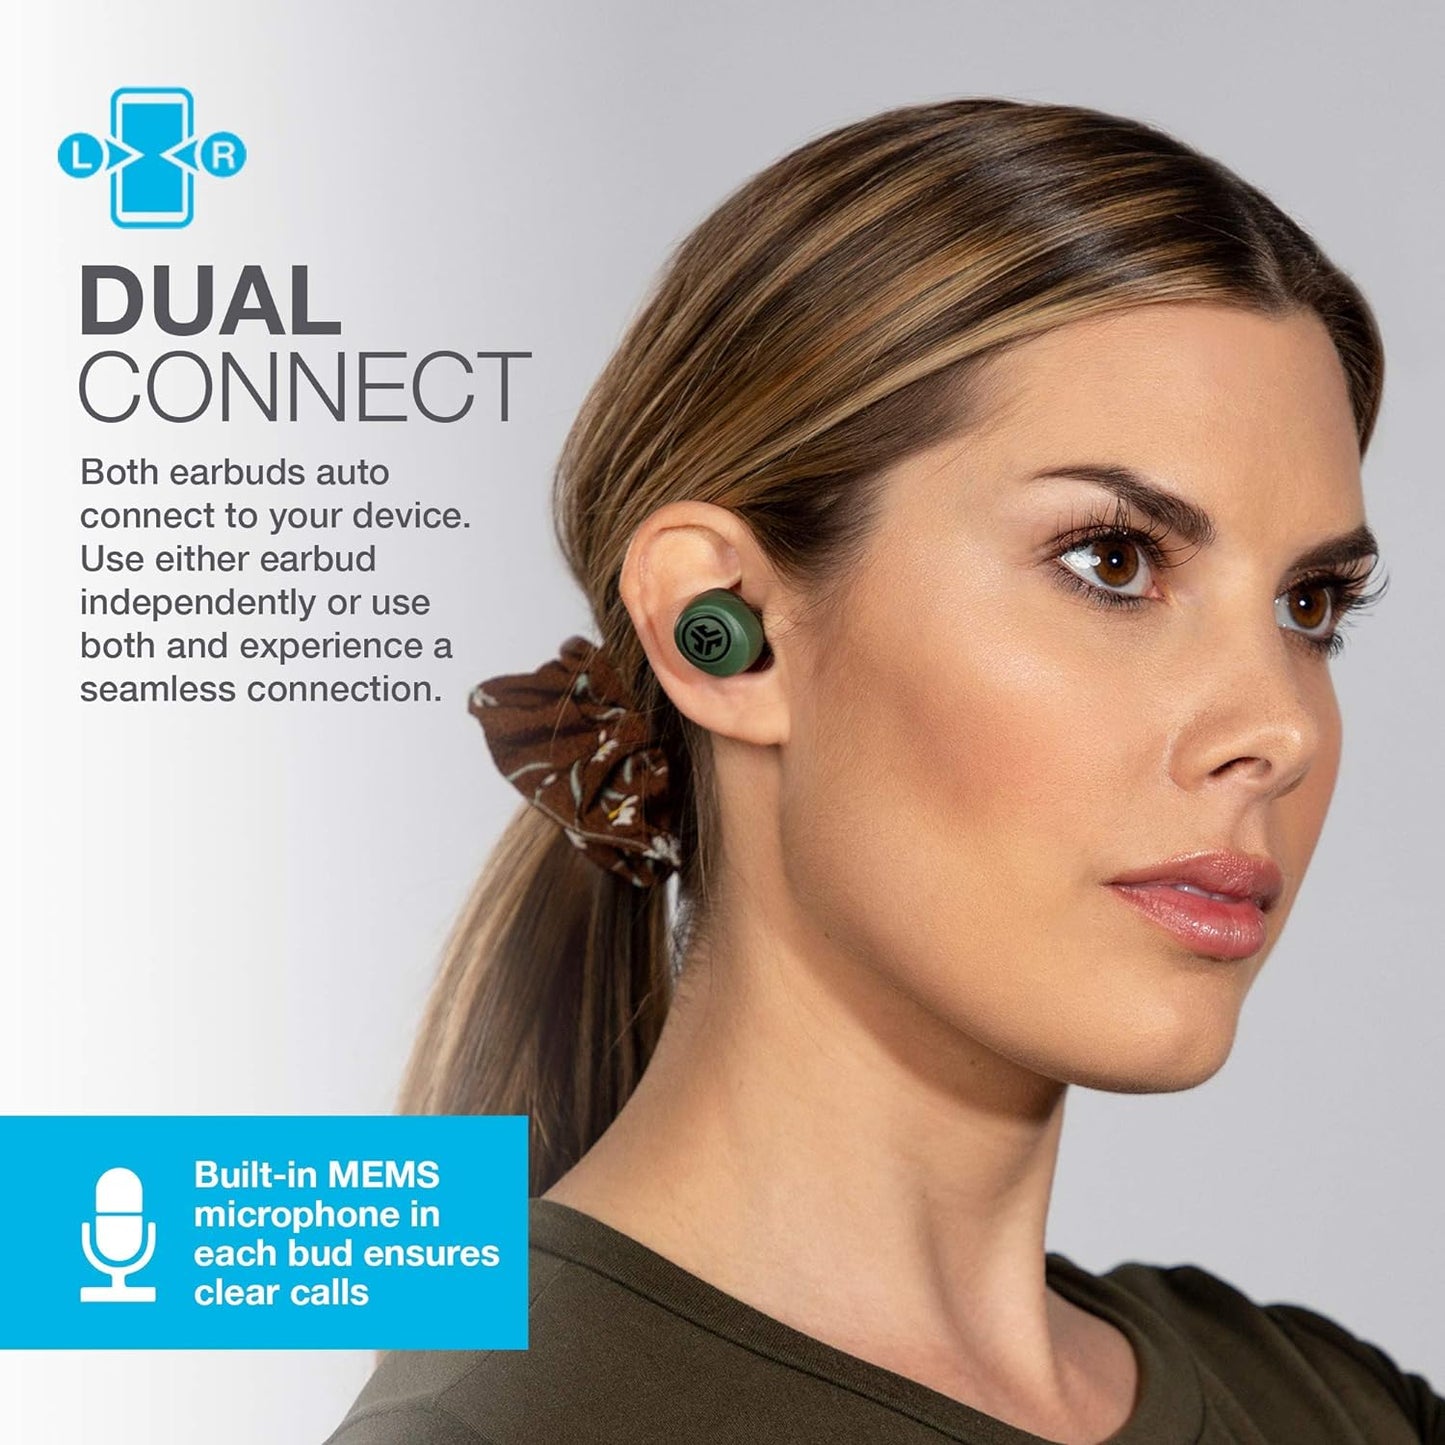 Go Air True Wireless Bluetooth Earbuds + Charging Case